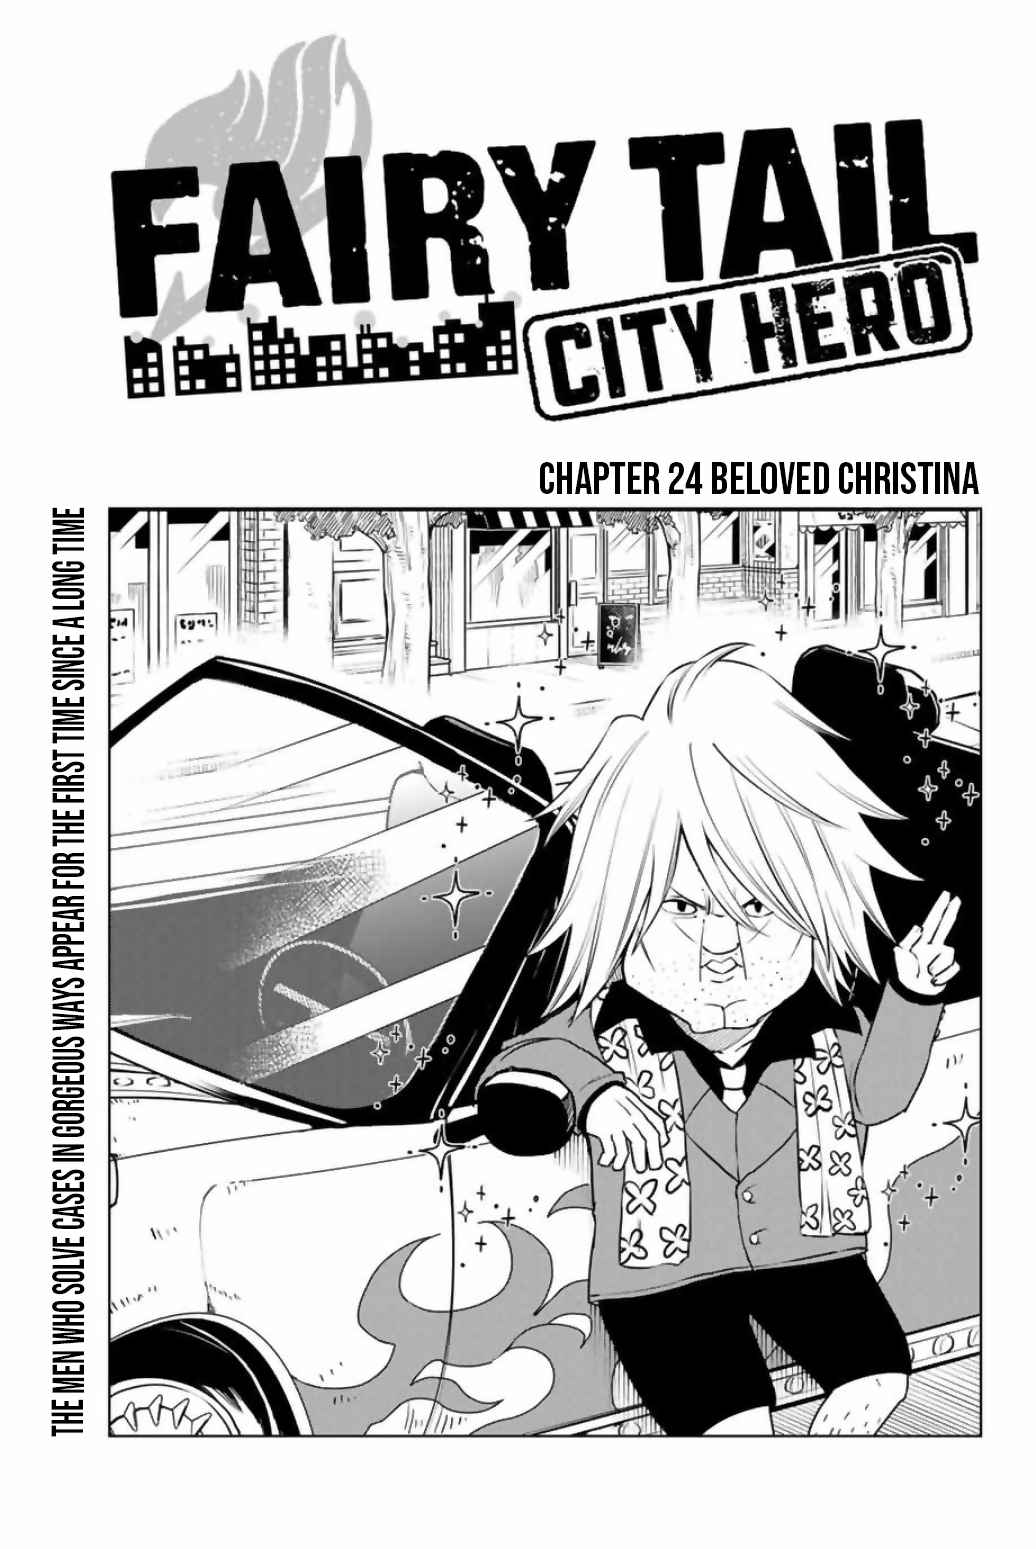 Fairy Tail: City Hero Ch. 24 Beloved Christina